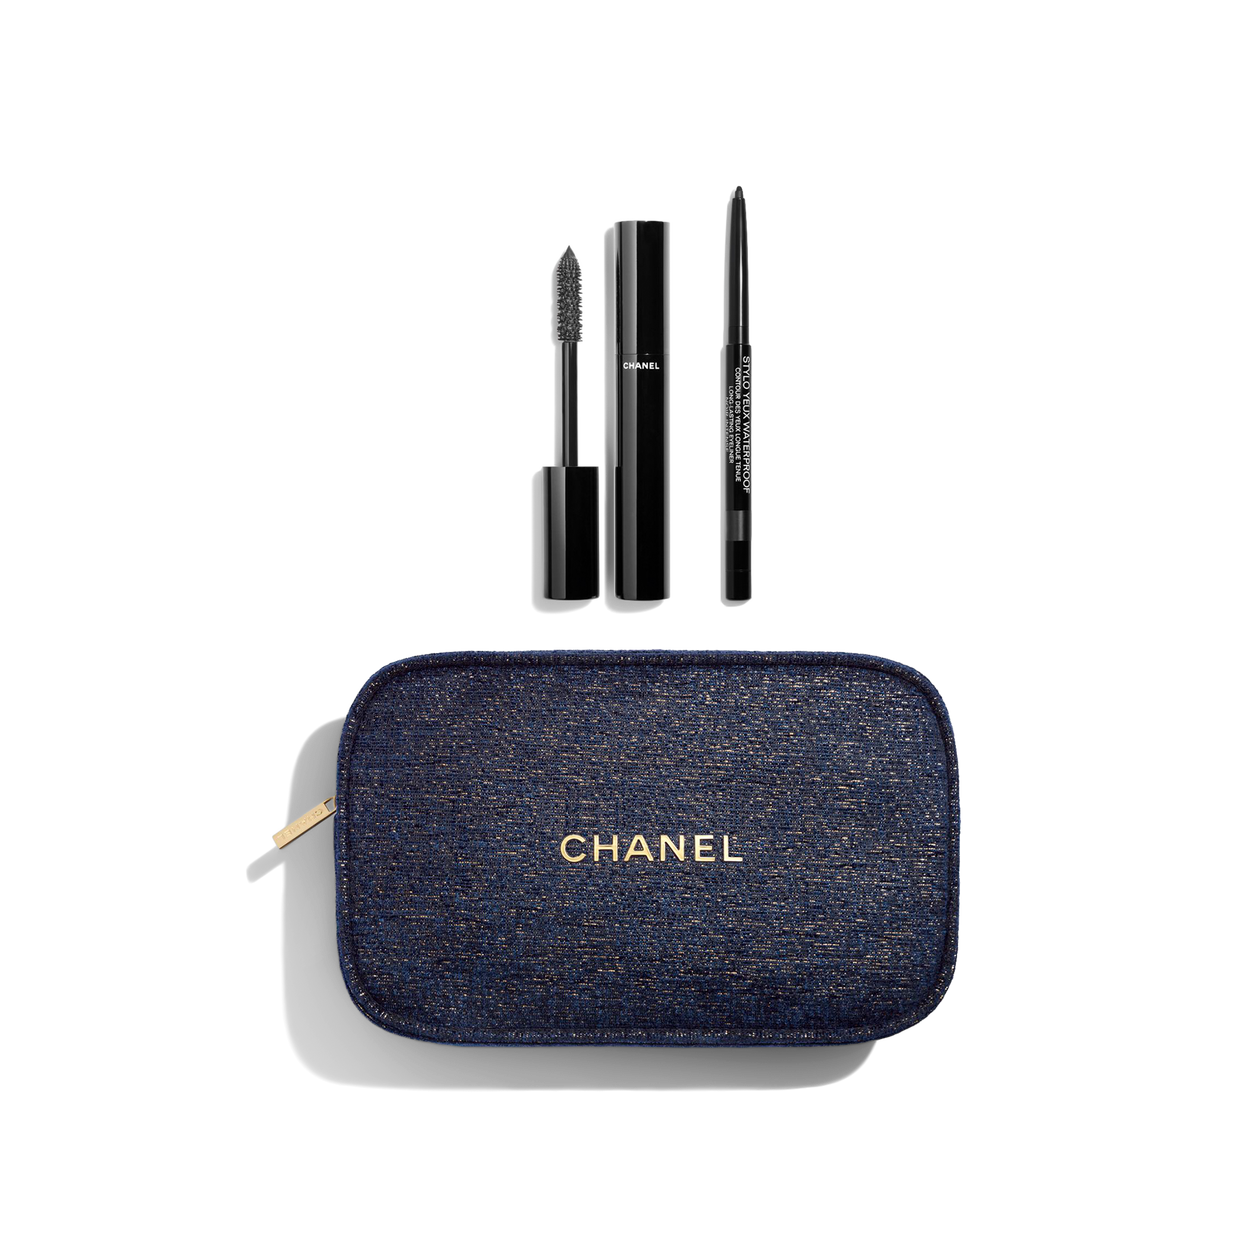  Chanel Stylo Yeux Waterproof Long-lasting Eyeliner - # 88 Noir  Intense By Chanel for Women - 0.01 Ounce Eyeliner, 0.01 Ounce : Chanel:  Beauty & Personal Care